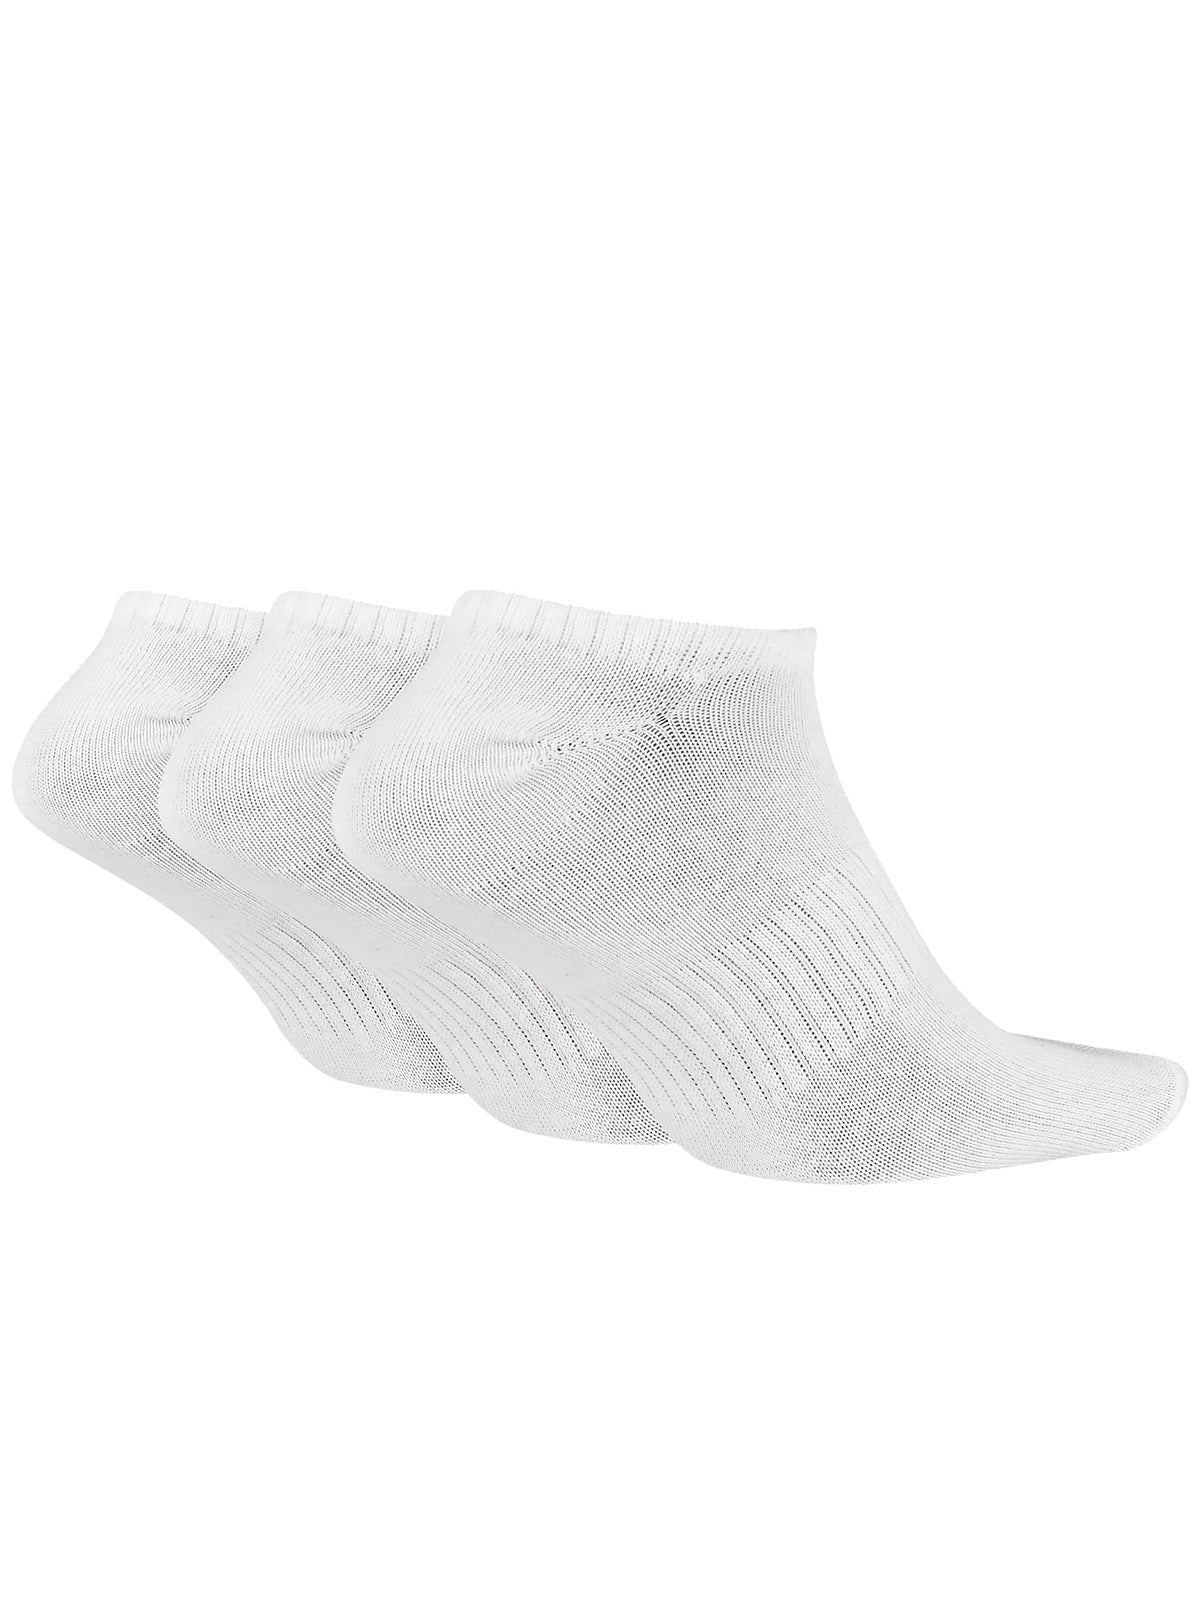 Calze Unisex Nike - Everyday Lightweight No-Show 3Pp Socks - Bianco